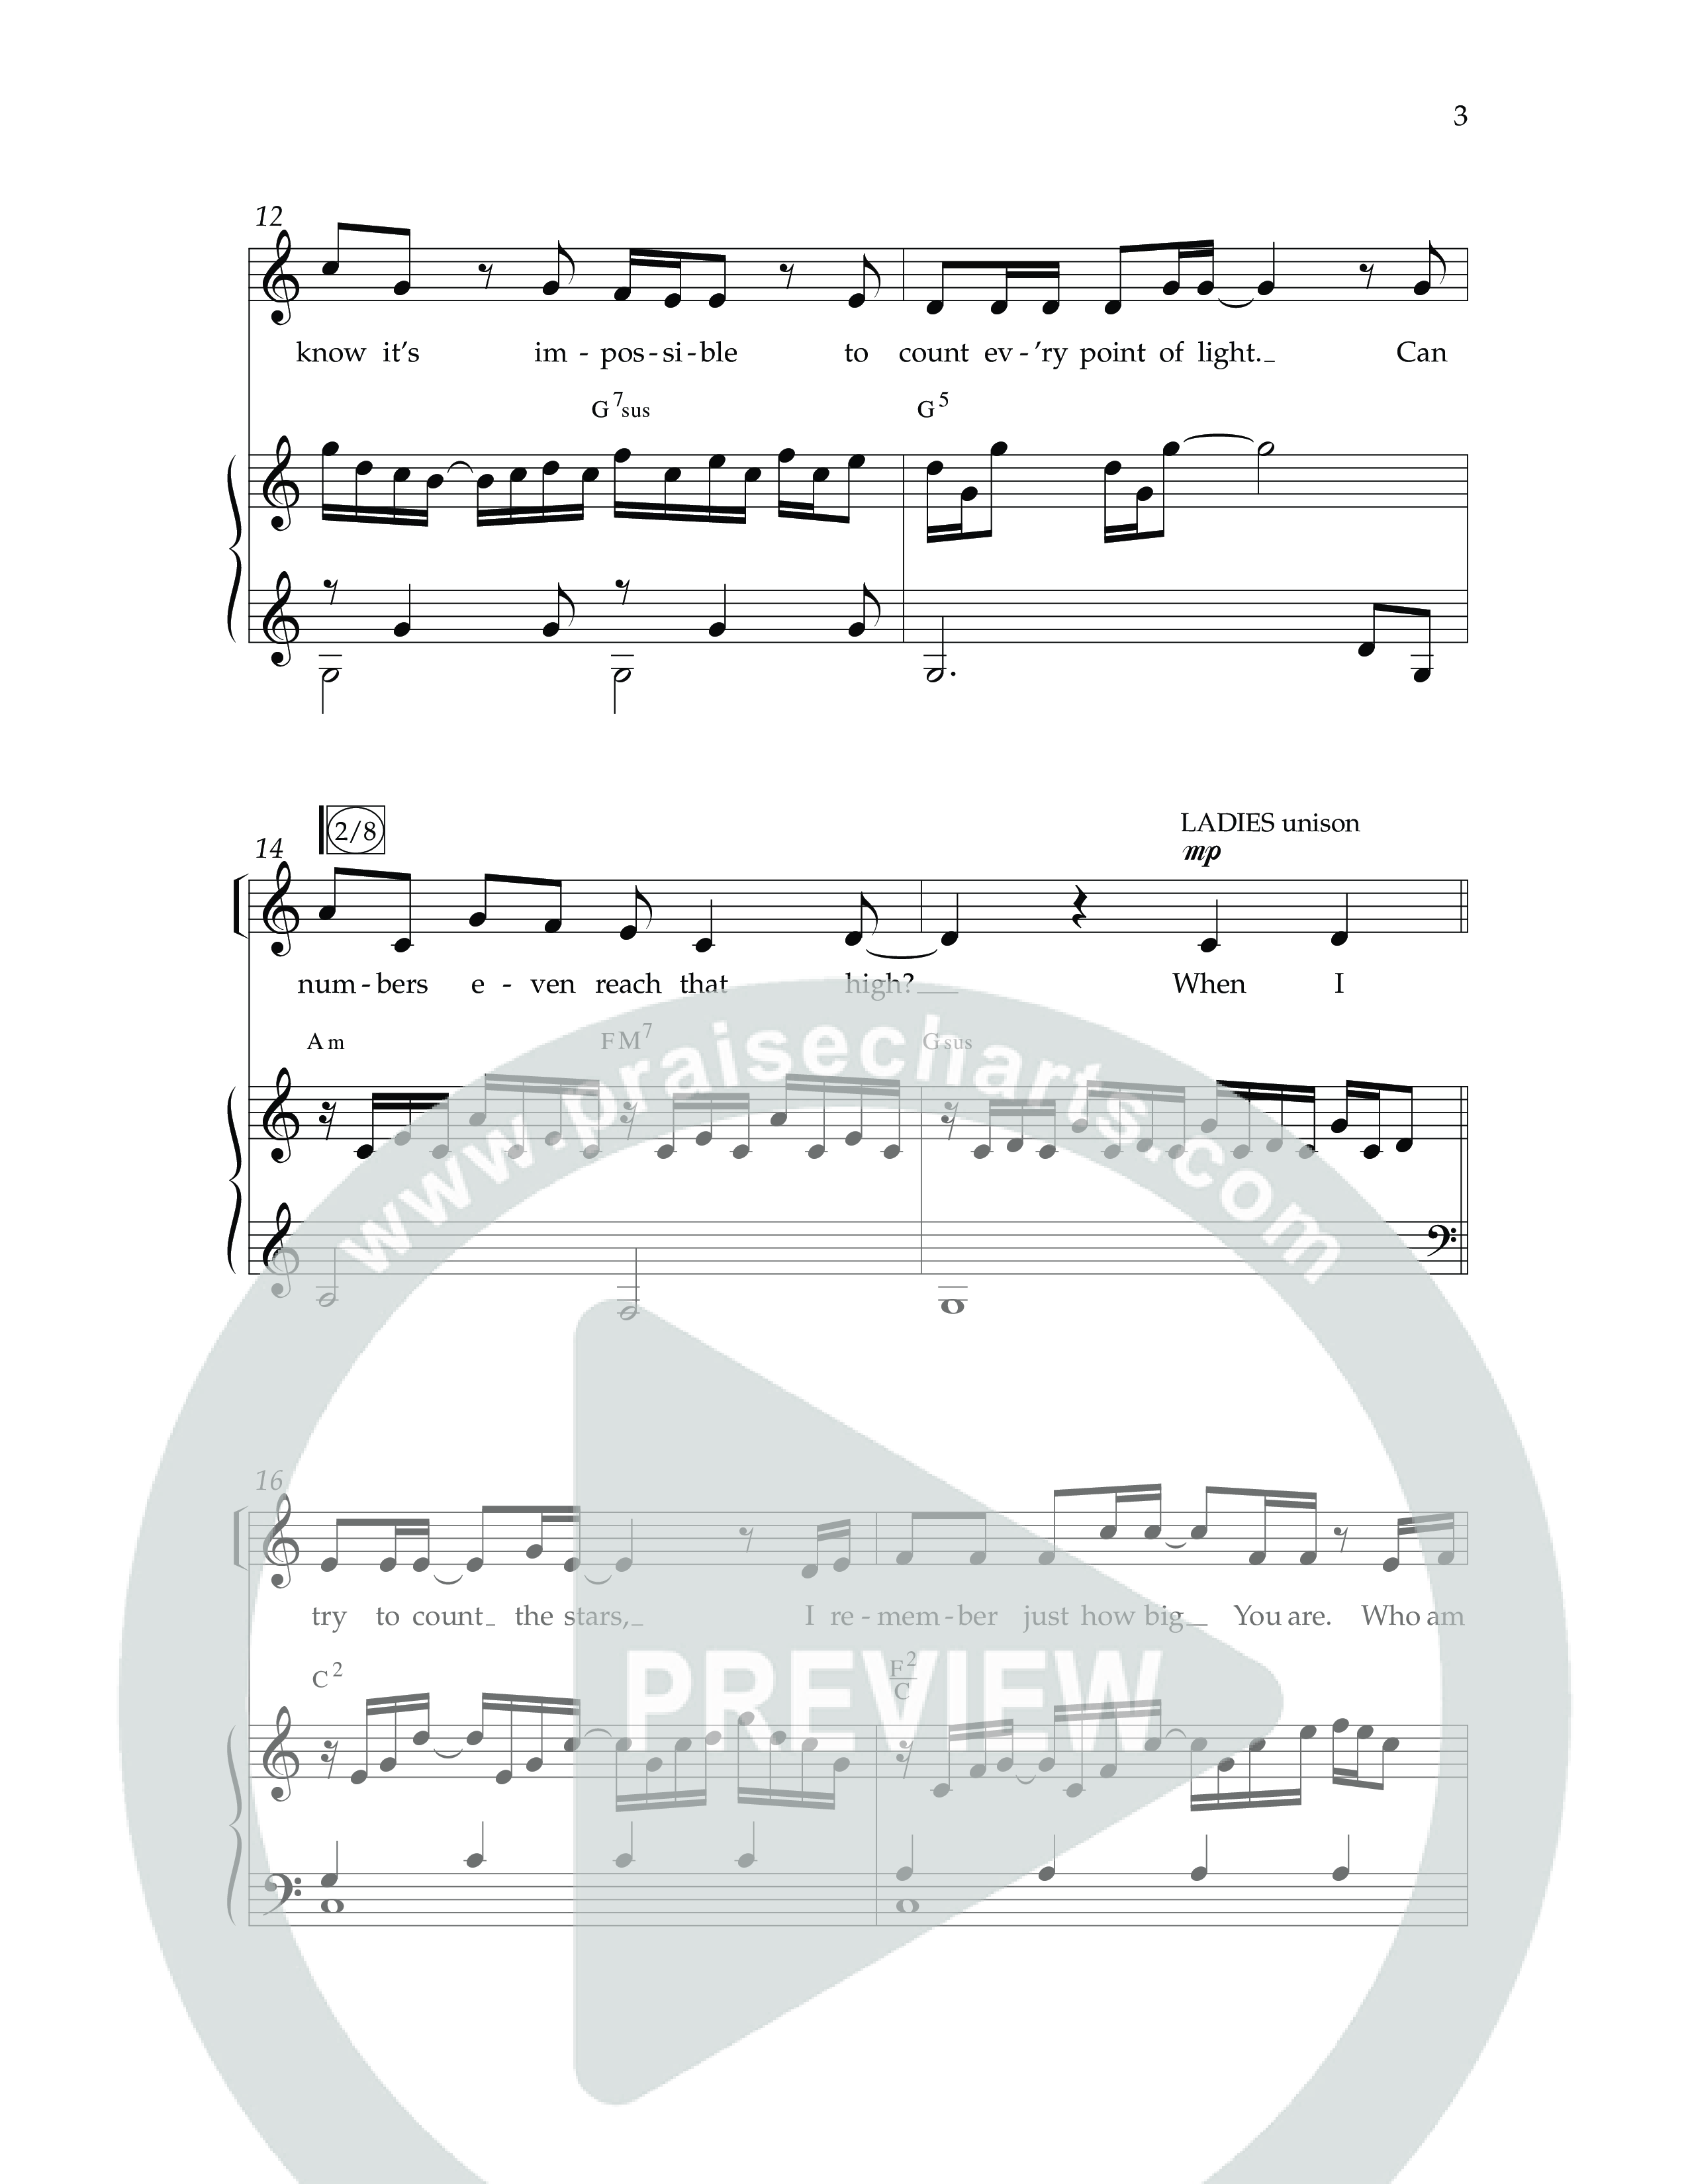 Count The Stars (Choral Anthem SATB) Anthem (SATB/Piano) (Lifeway Choral / Arr. Phillip Keveren / Arr. Kent Hooper)